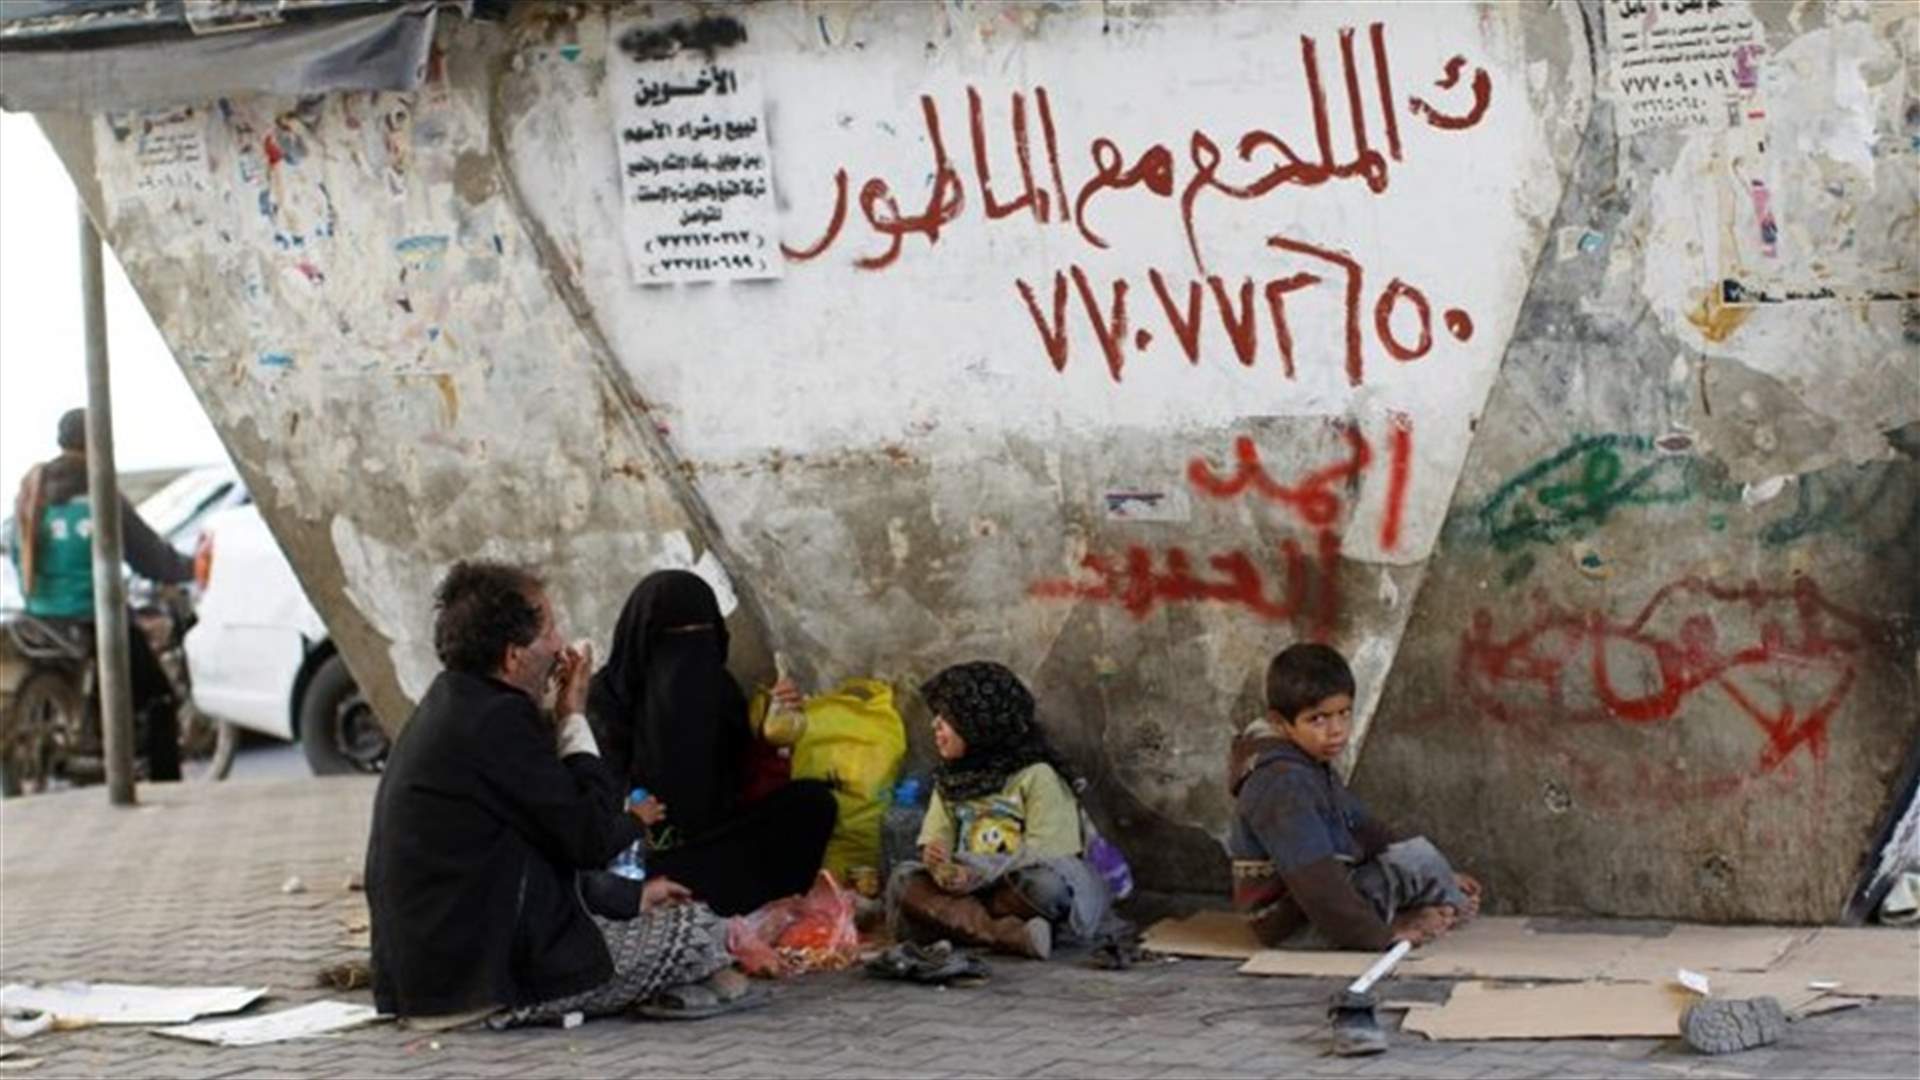 Sanaa air raids resume as Yemen truce expires, say residents